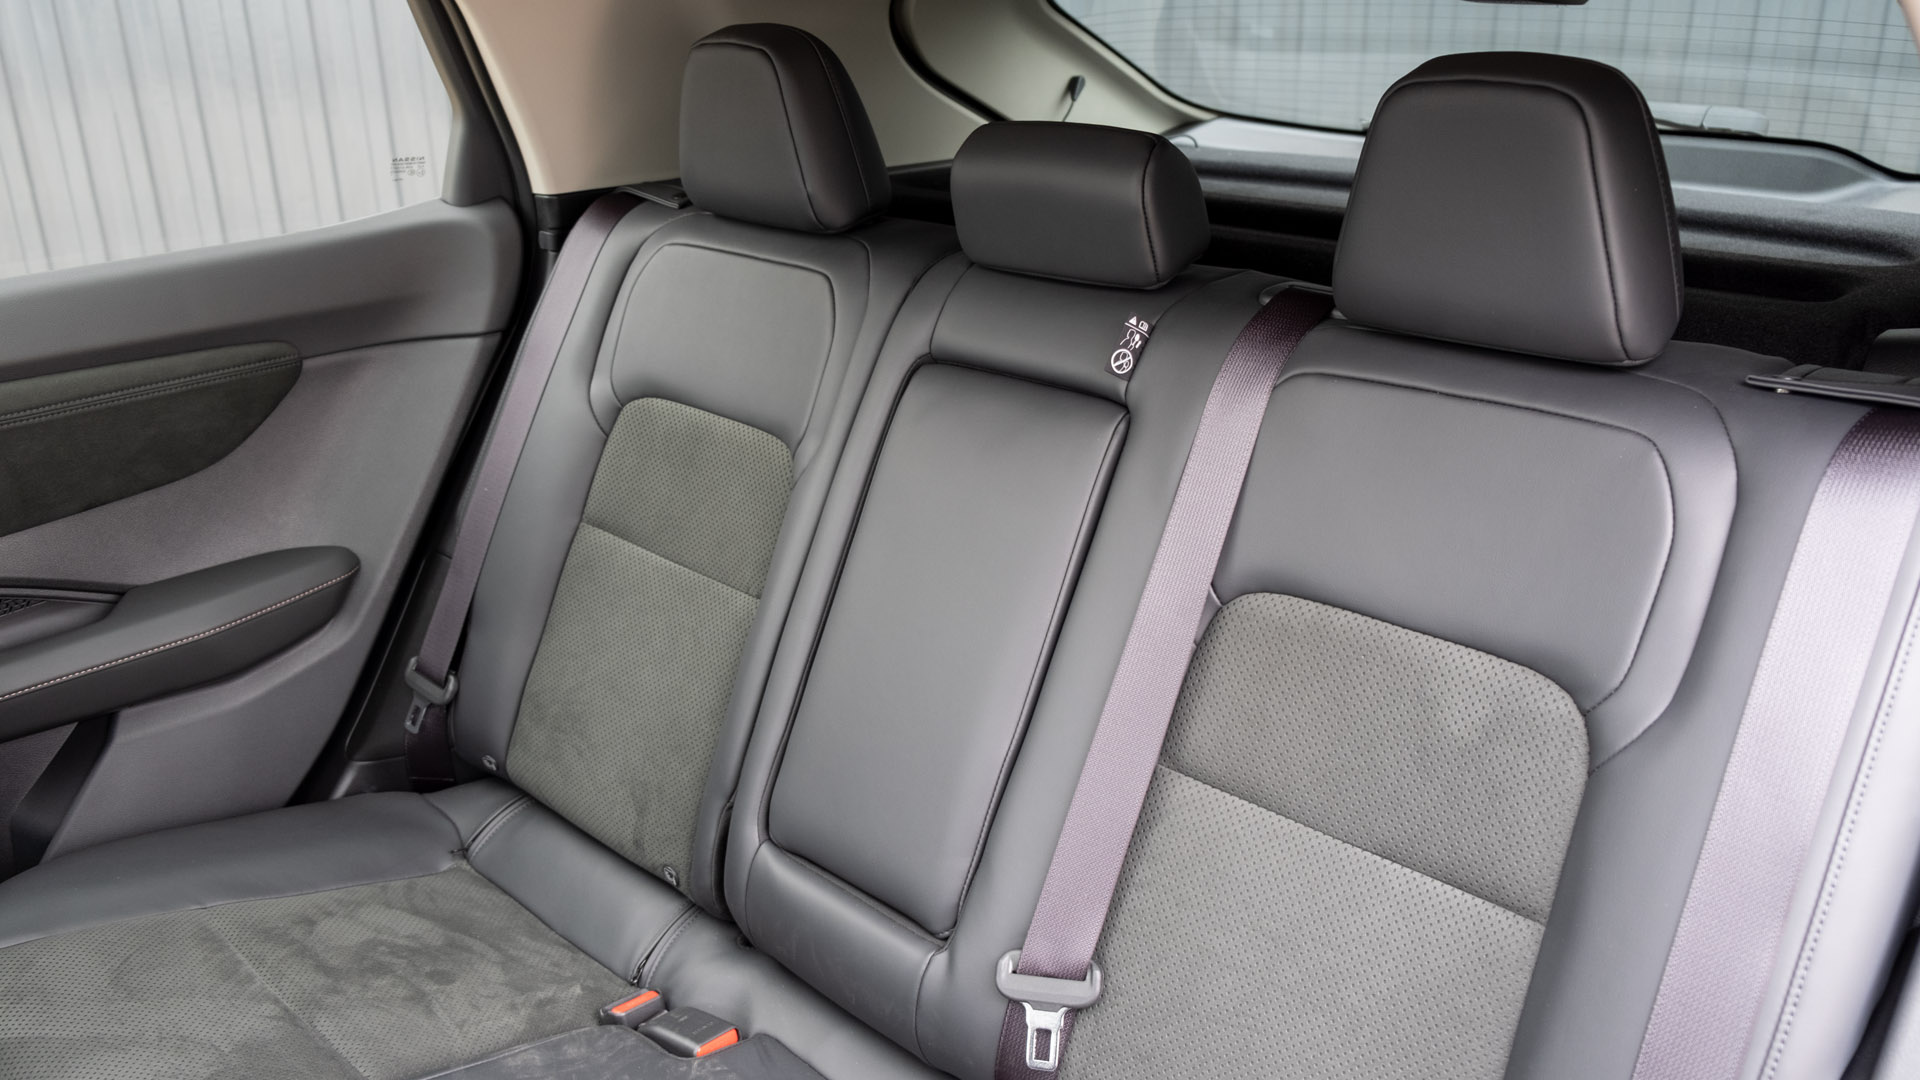 Nissan Ariya rear seat comfort